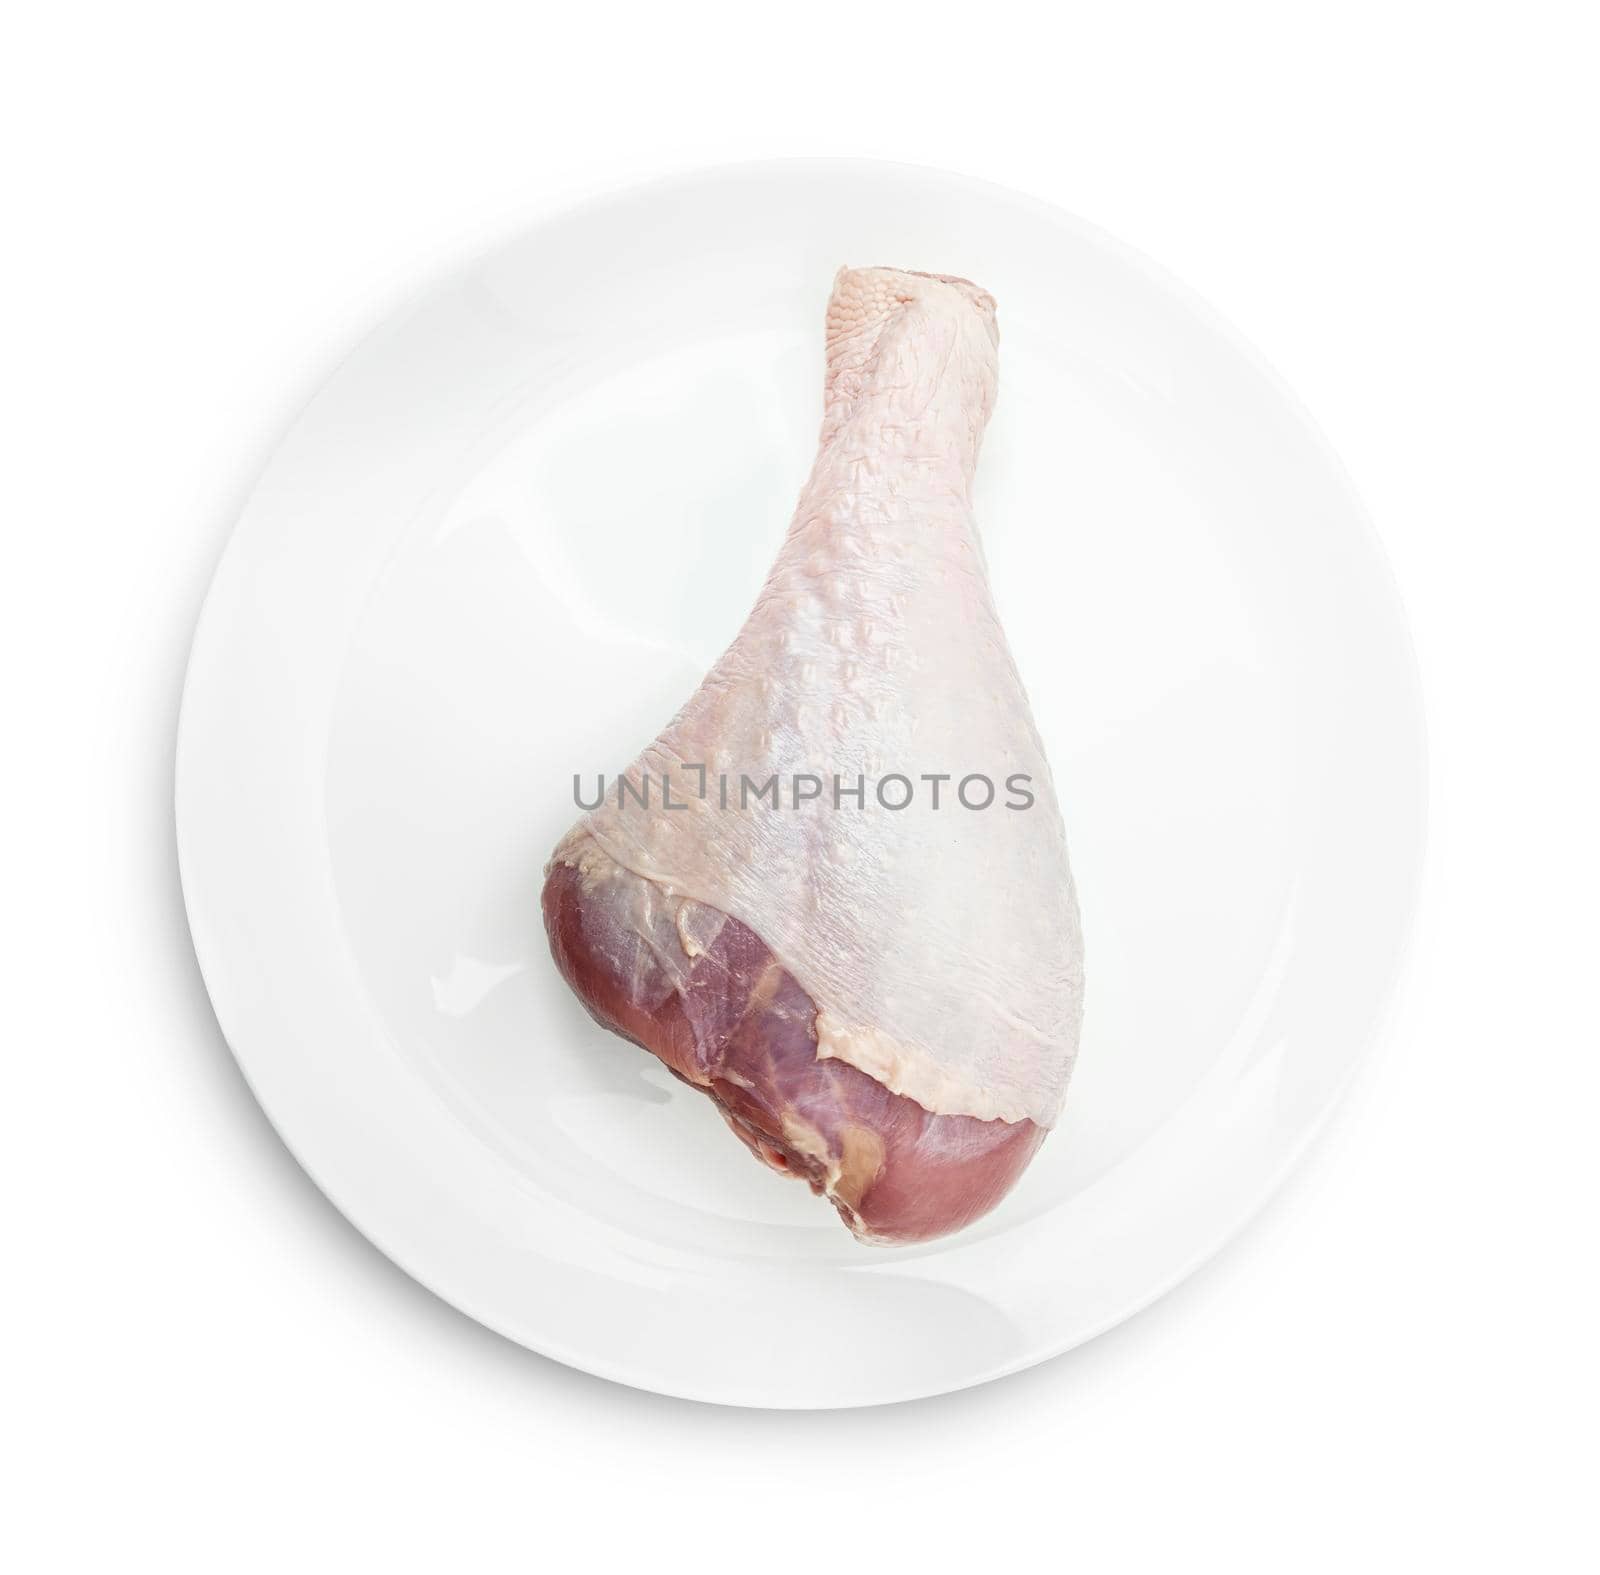 One RAW turkey leg on a white plate by SlayCer